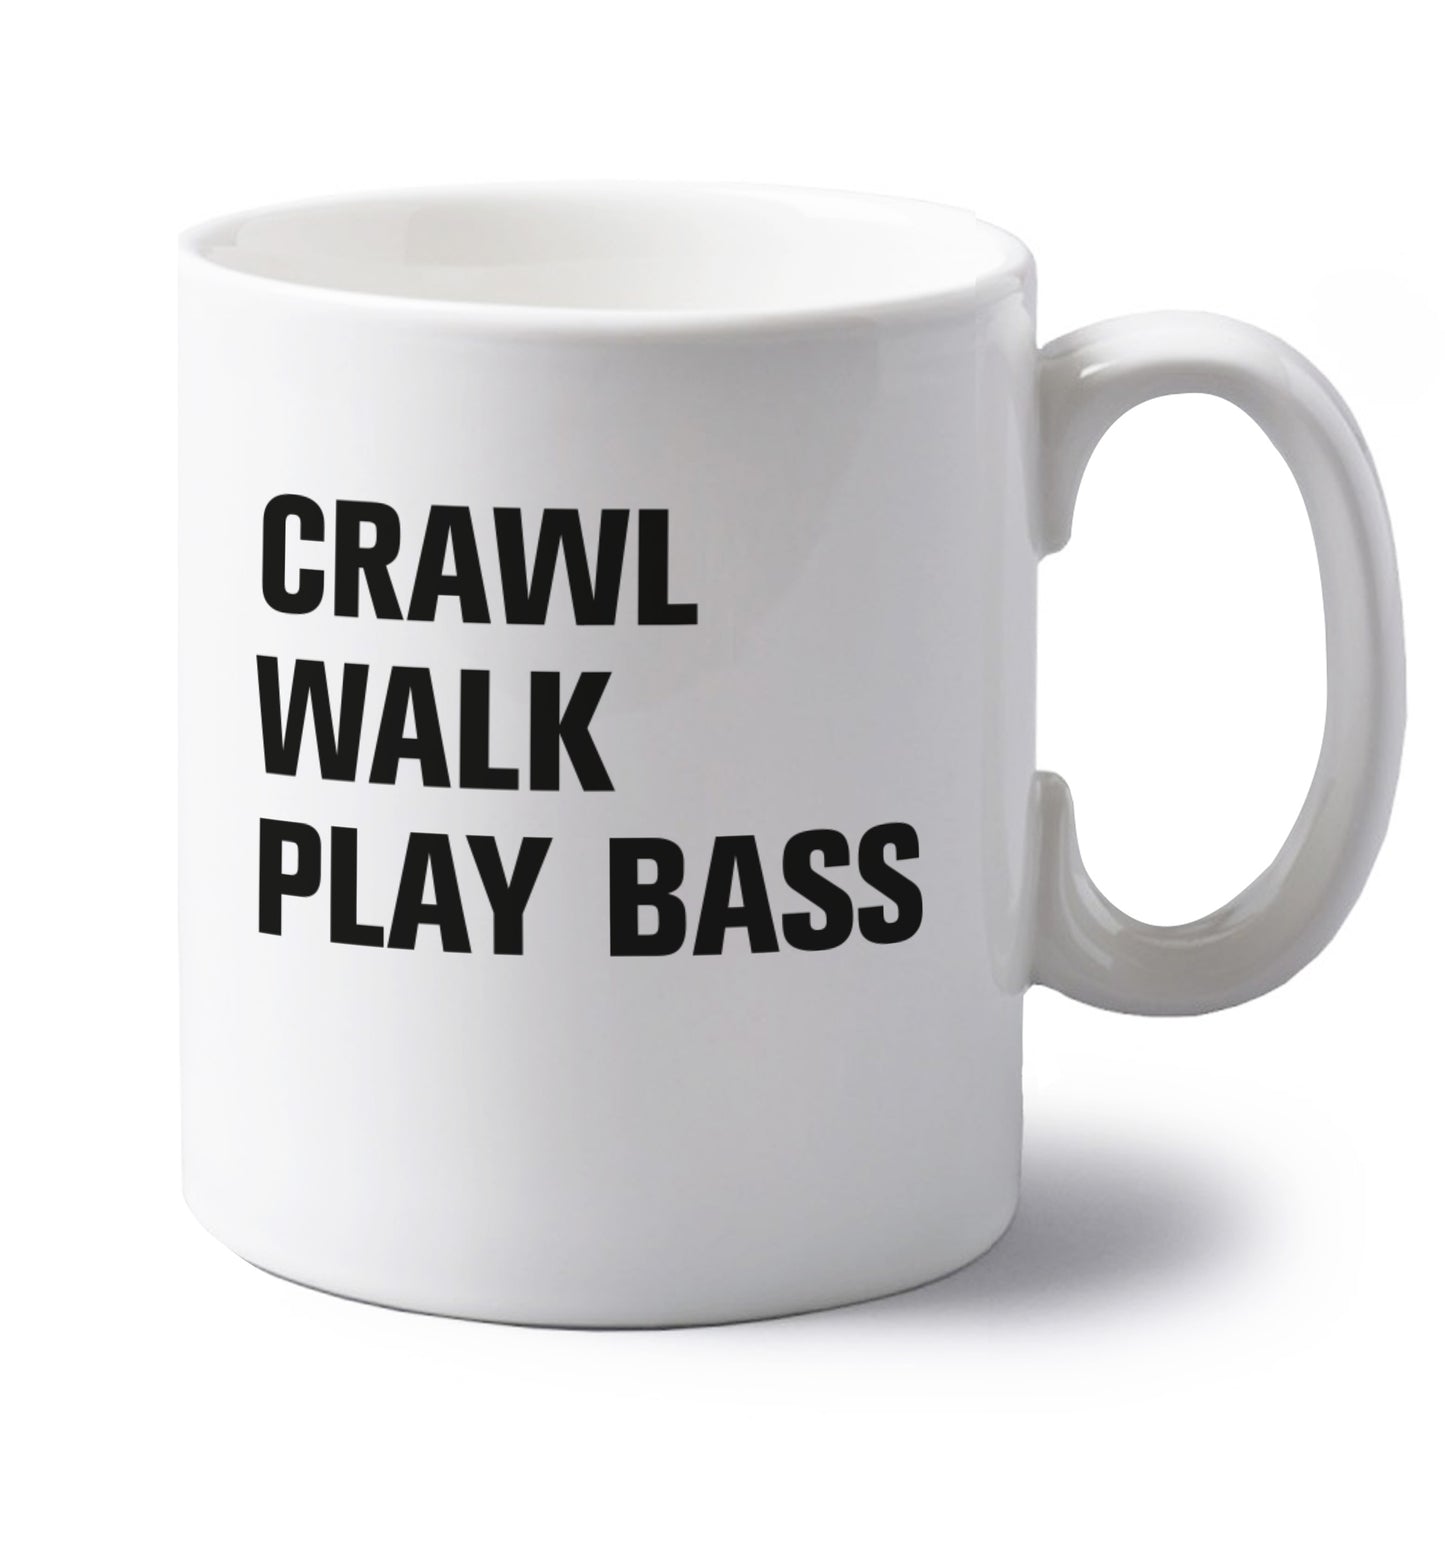 Crawl Walk Play Bass left handed white ceramic mug 